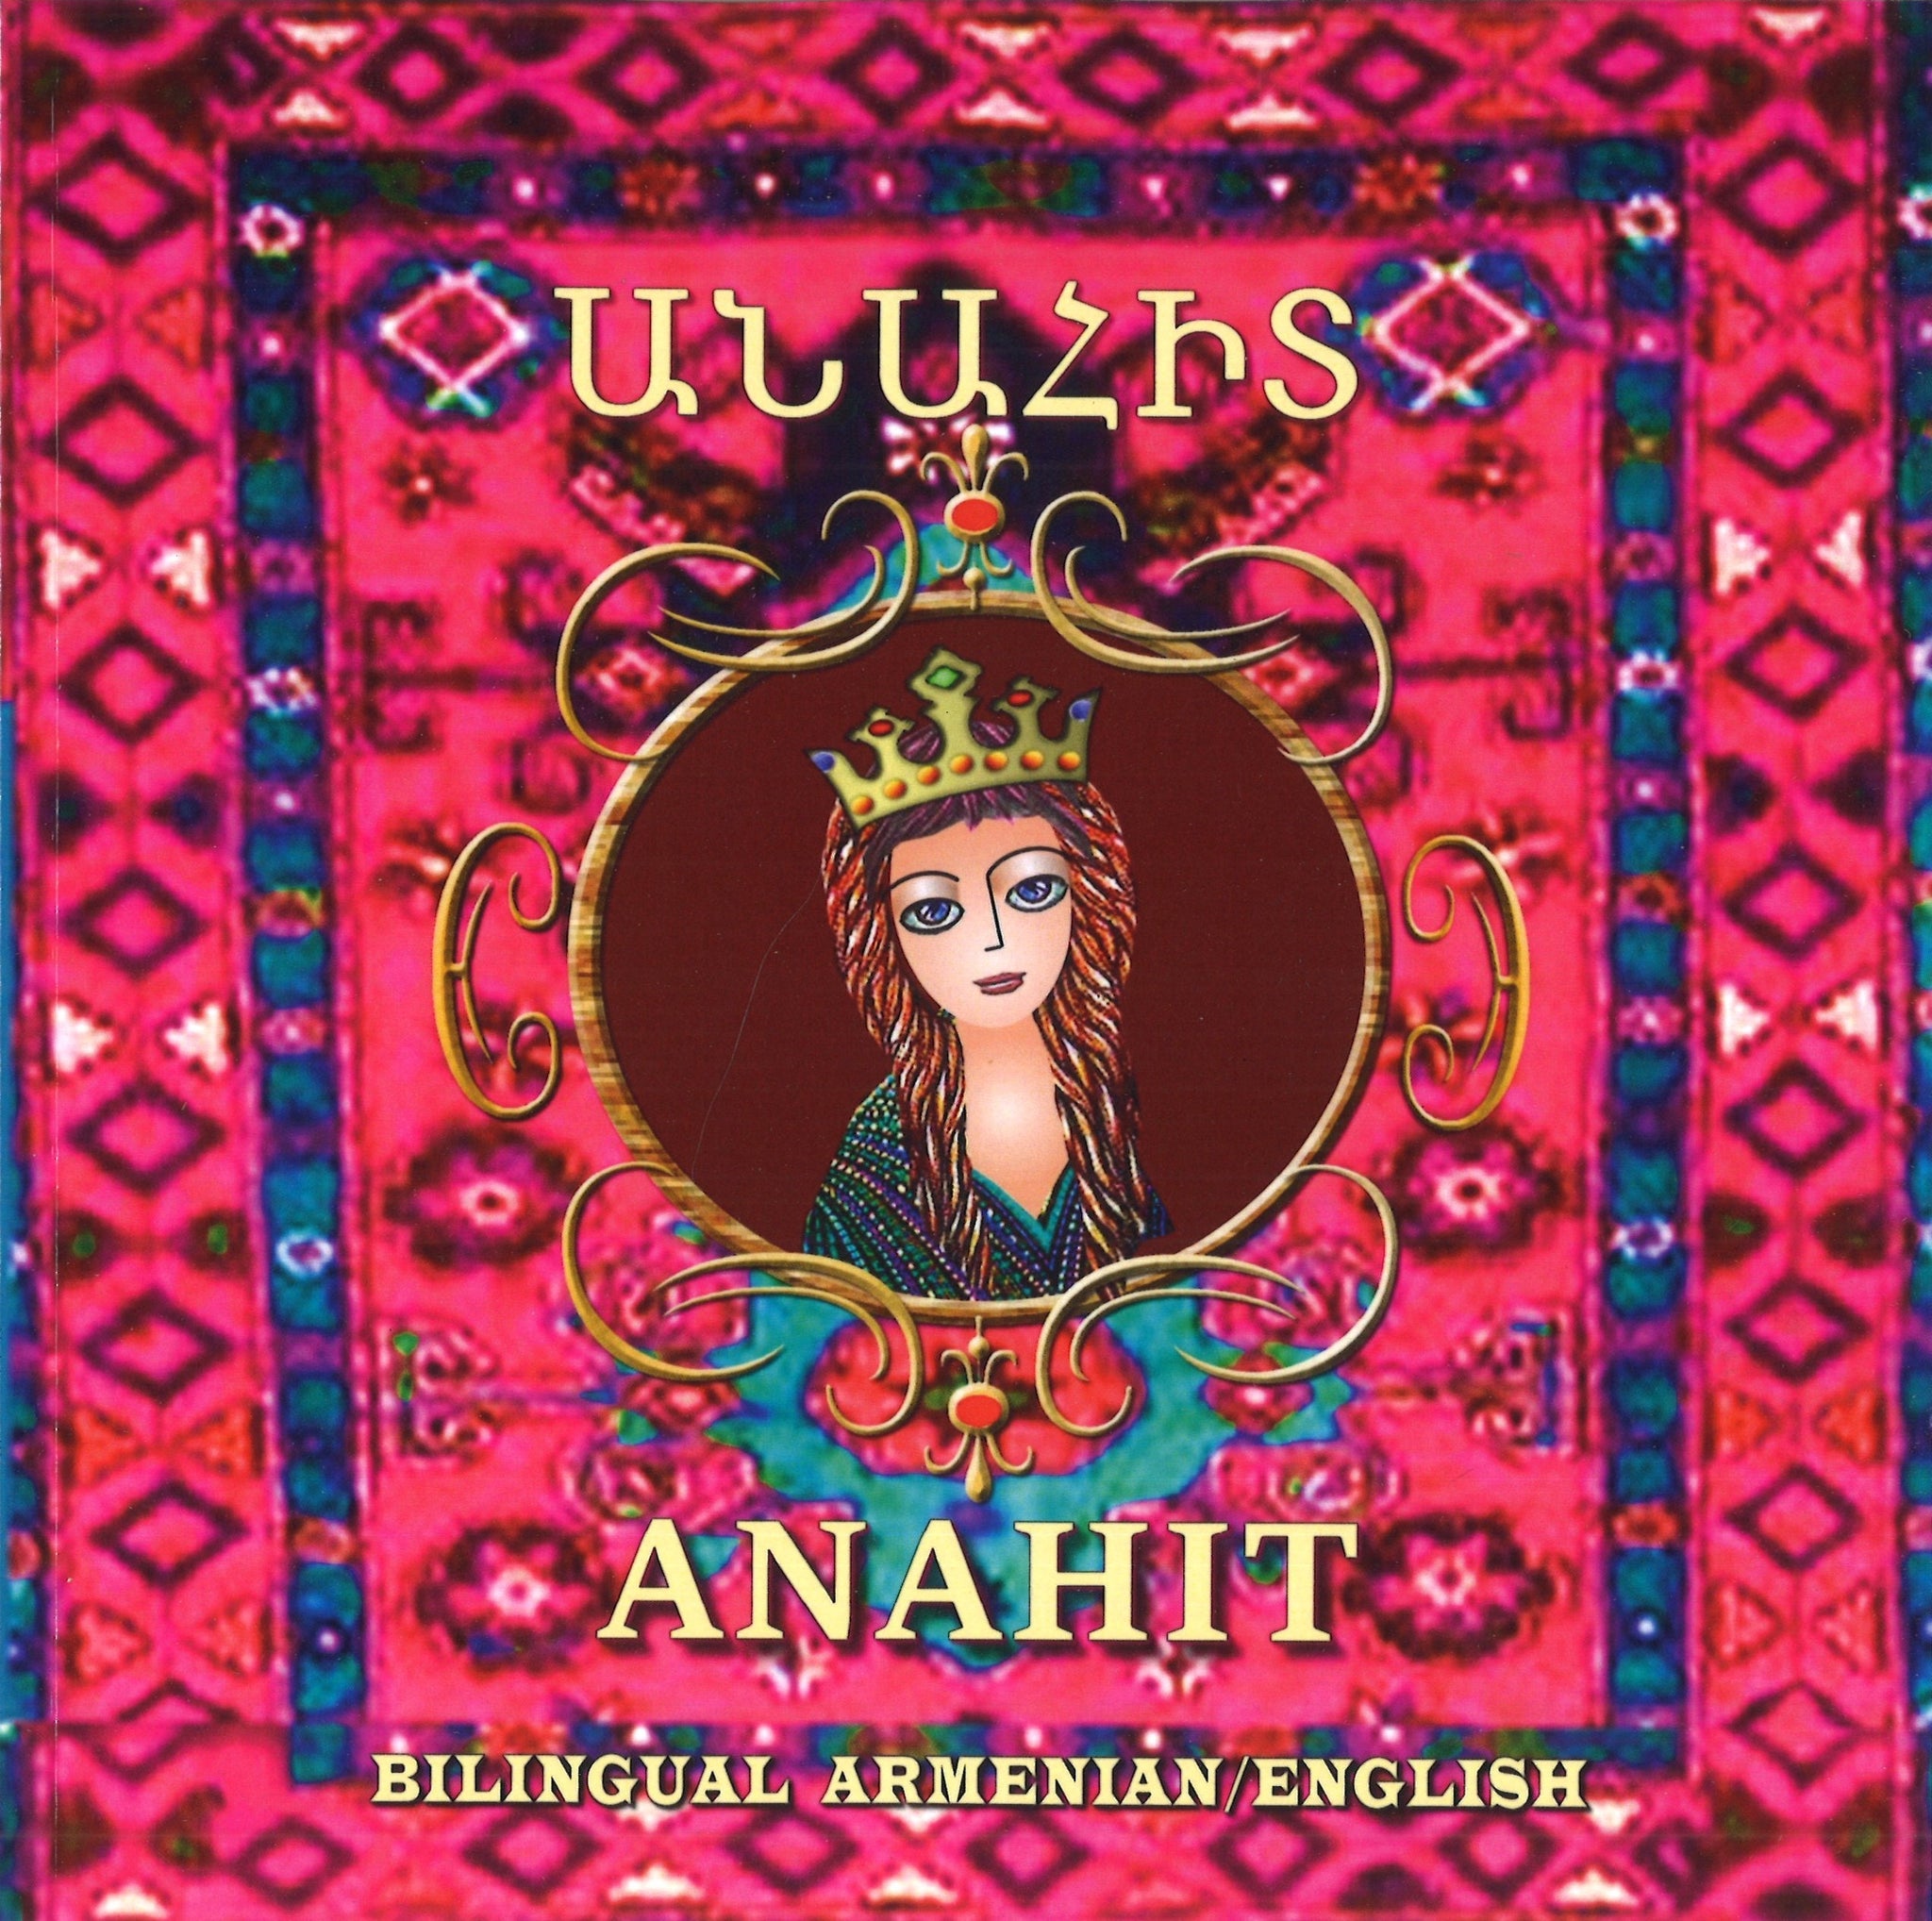 ANAHIT ~ Bilingual Armenian/English